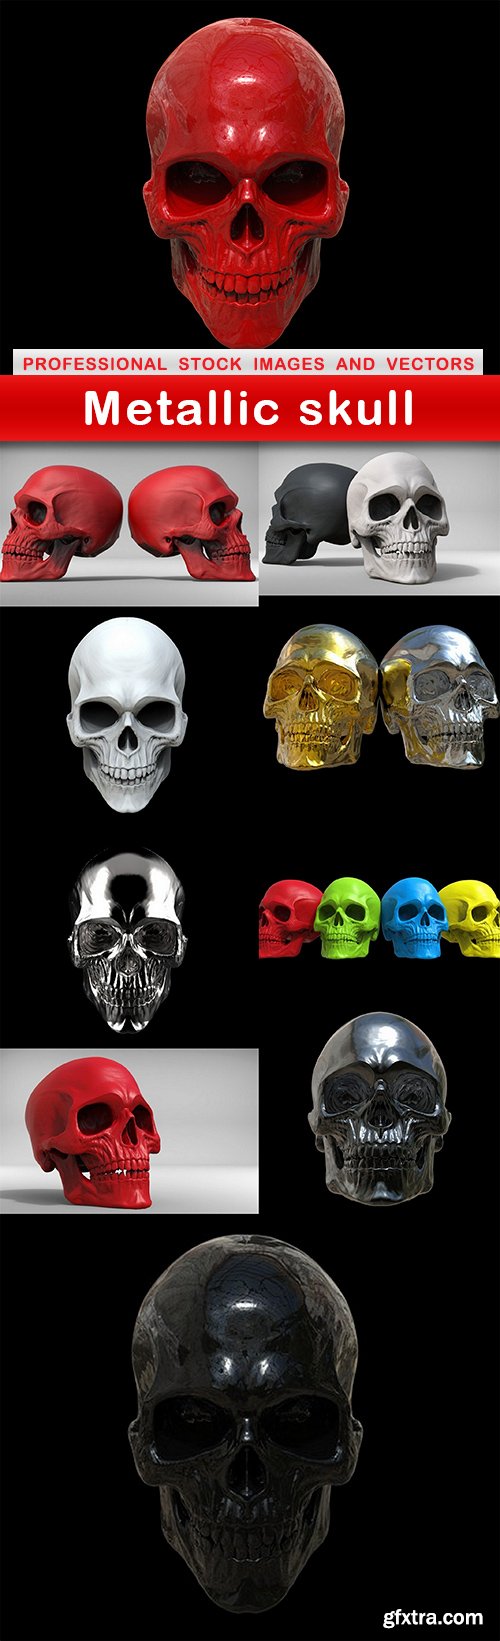 Metallic skull - 10 UHQ JPEG